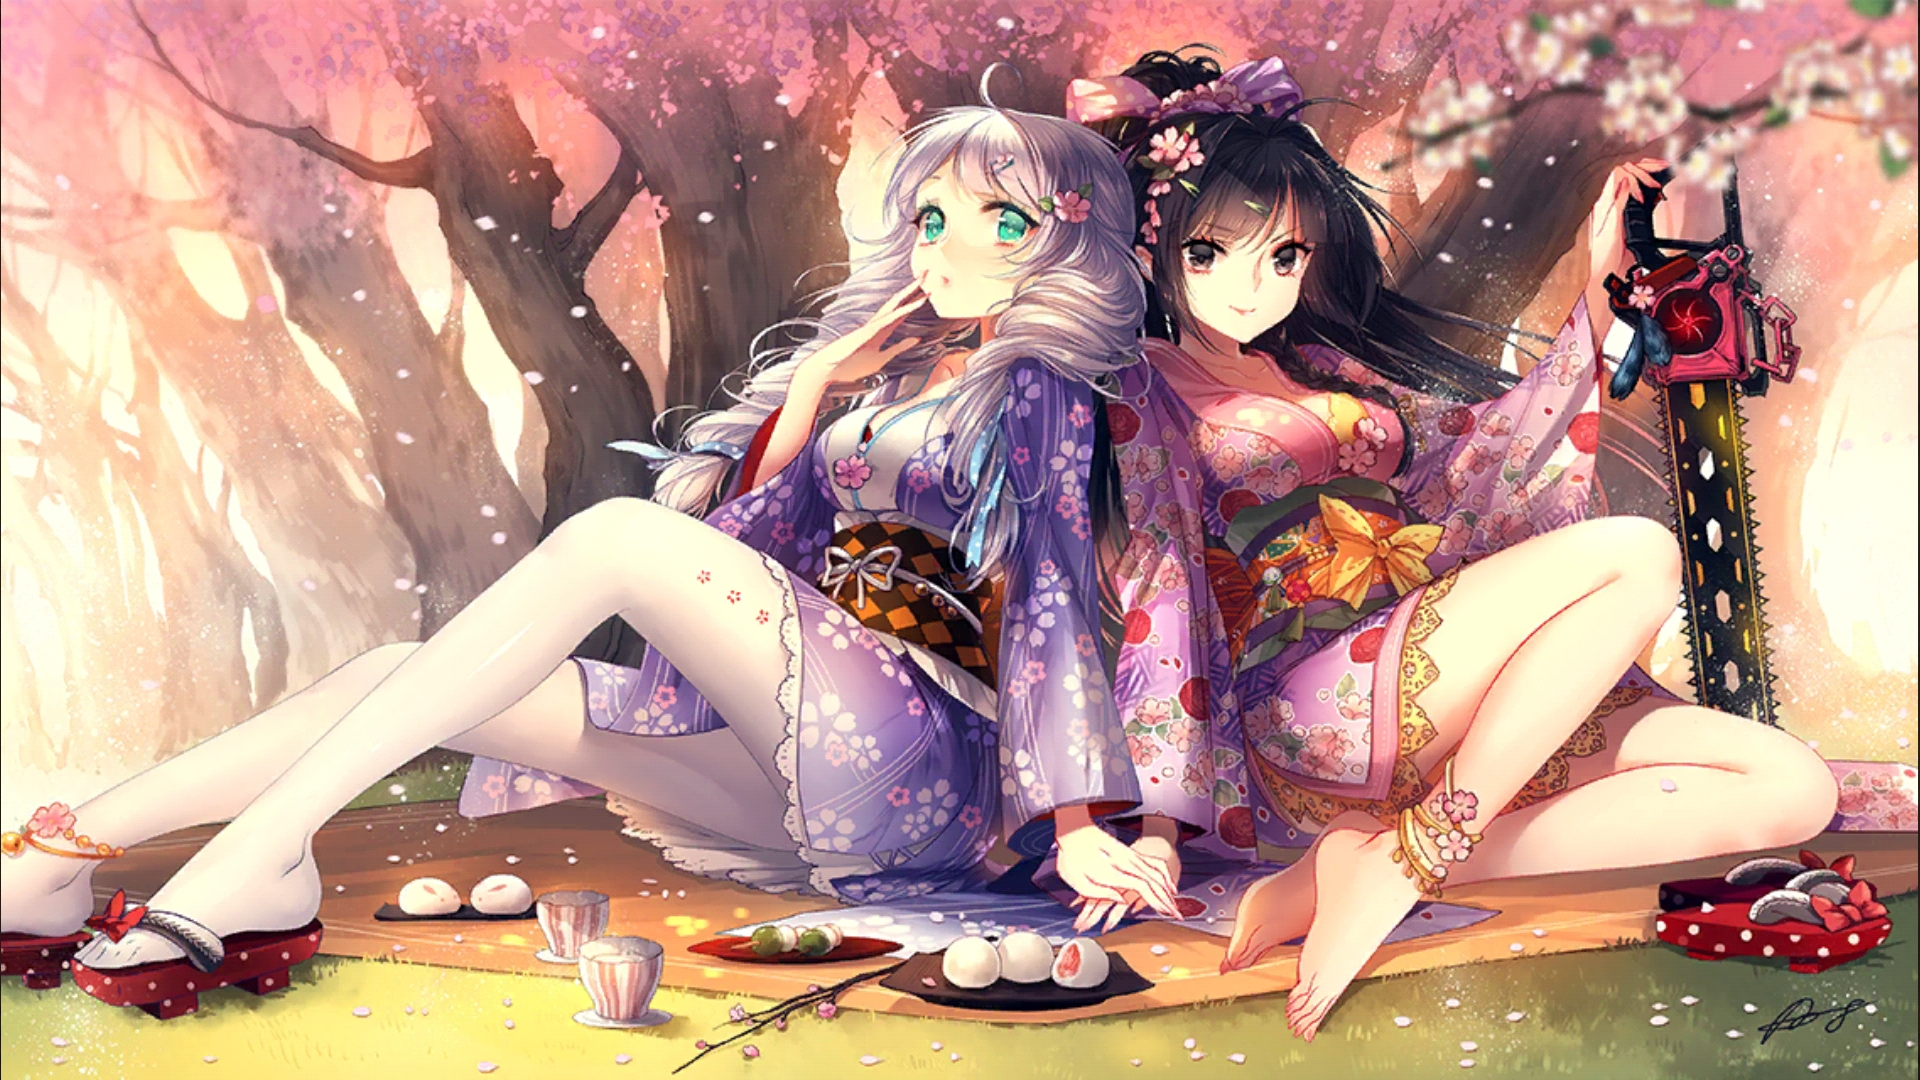 Anime 1920x1080 Guns GirlZ Kiana Kaslana Raiden Mei anime girls pantyhose yukata chainsaws cherry blossom Kieta